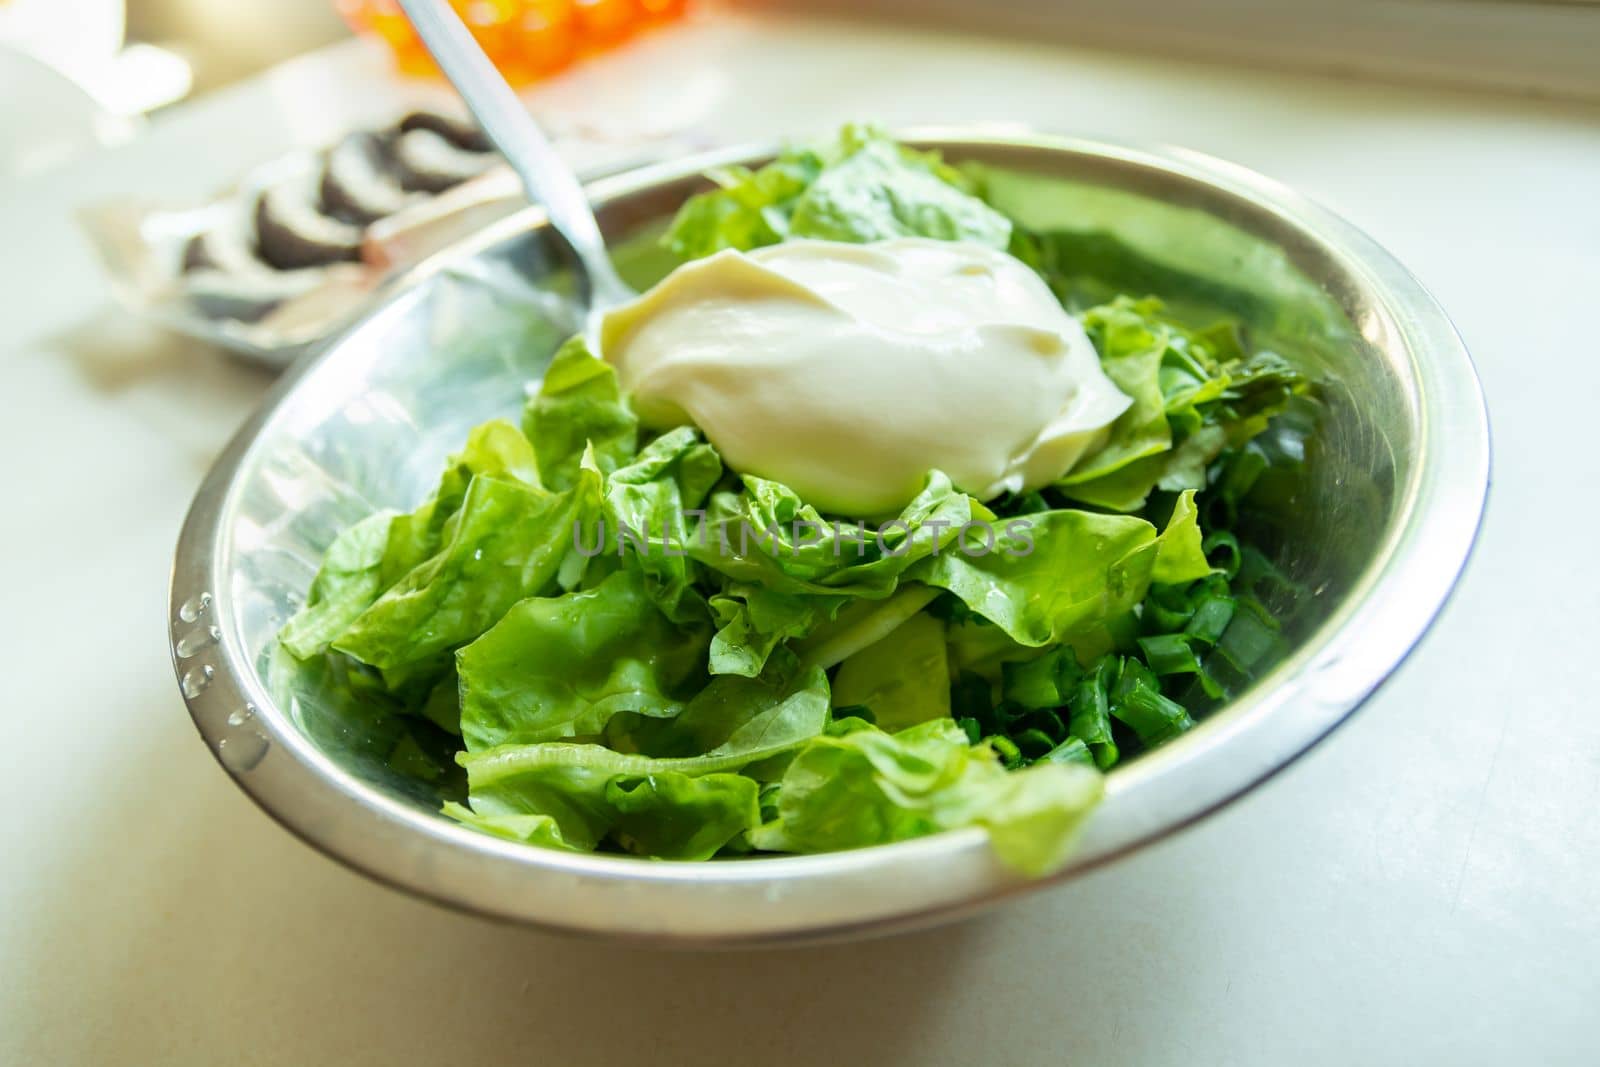 Sour cream on green lettuce in a bowl by darekb22